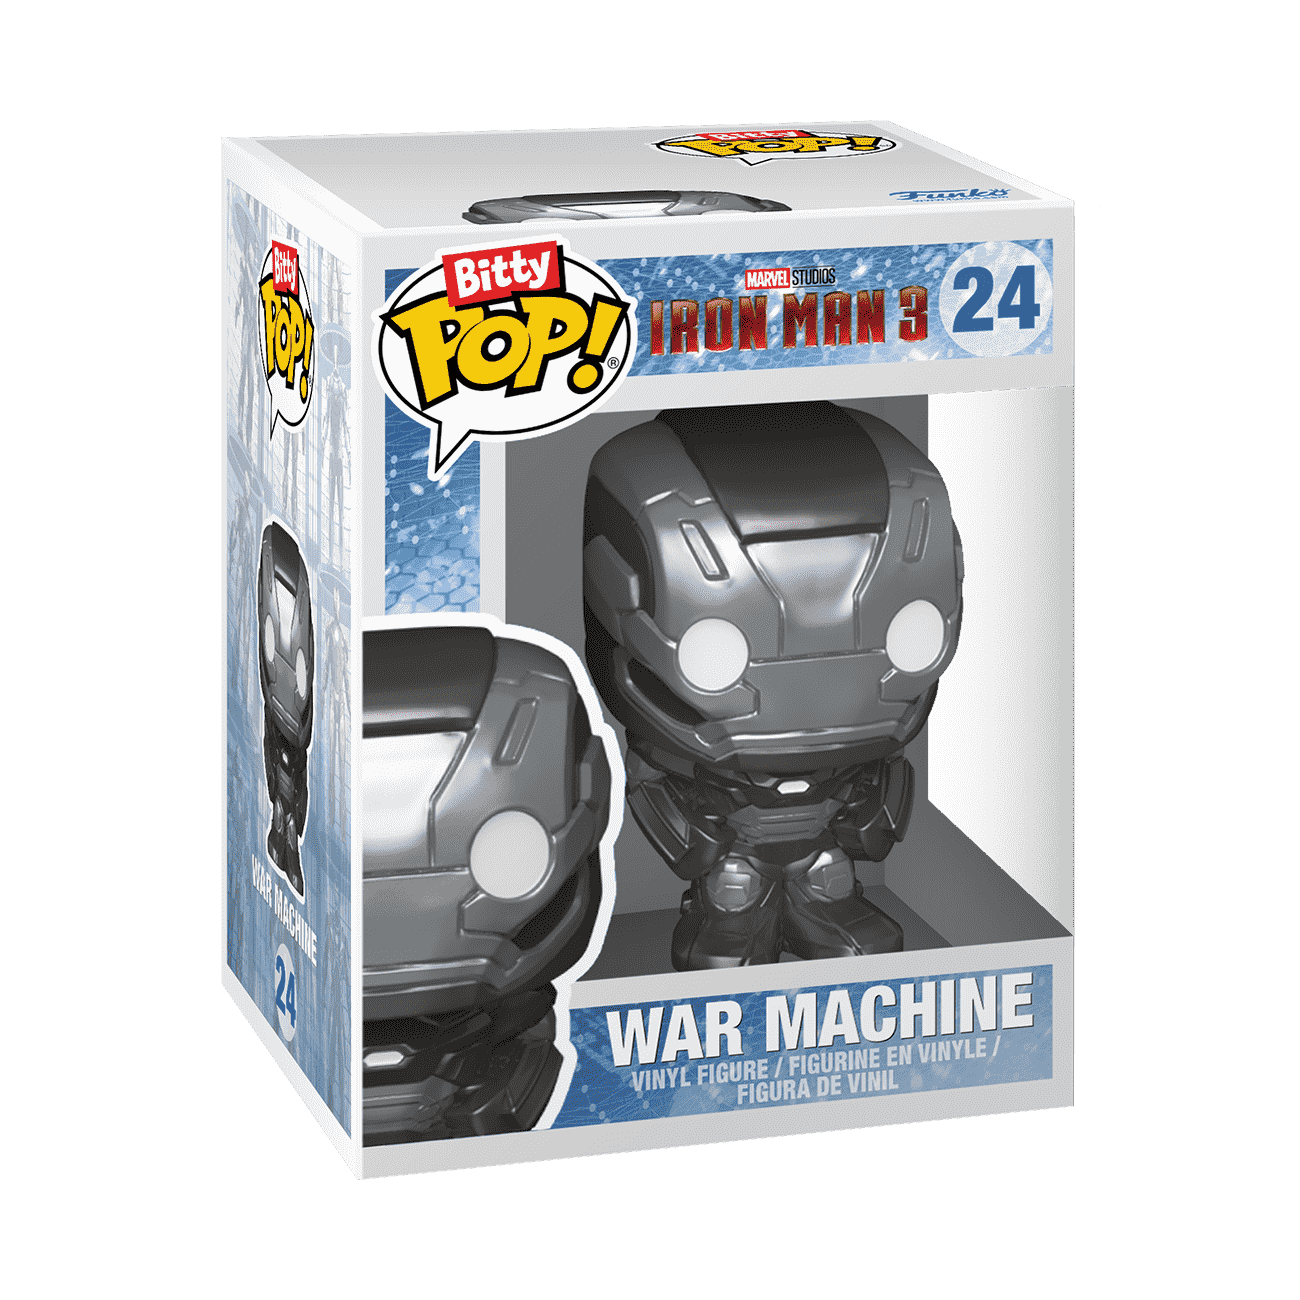 Buy Bitty Pop! Marvel the Infinity Saga War Machine at Funko.